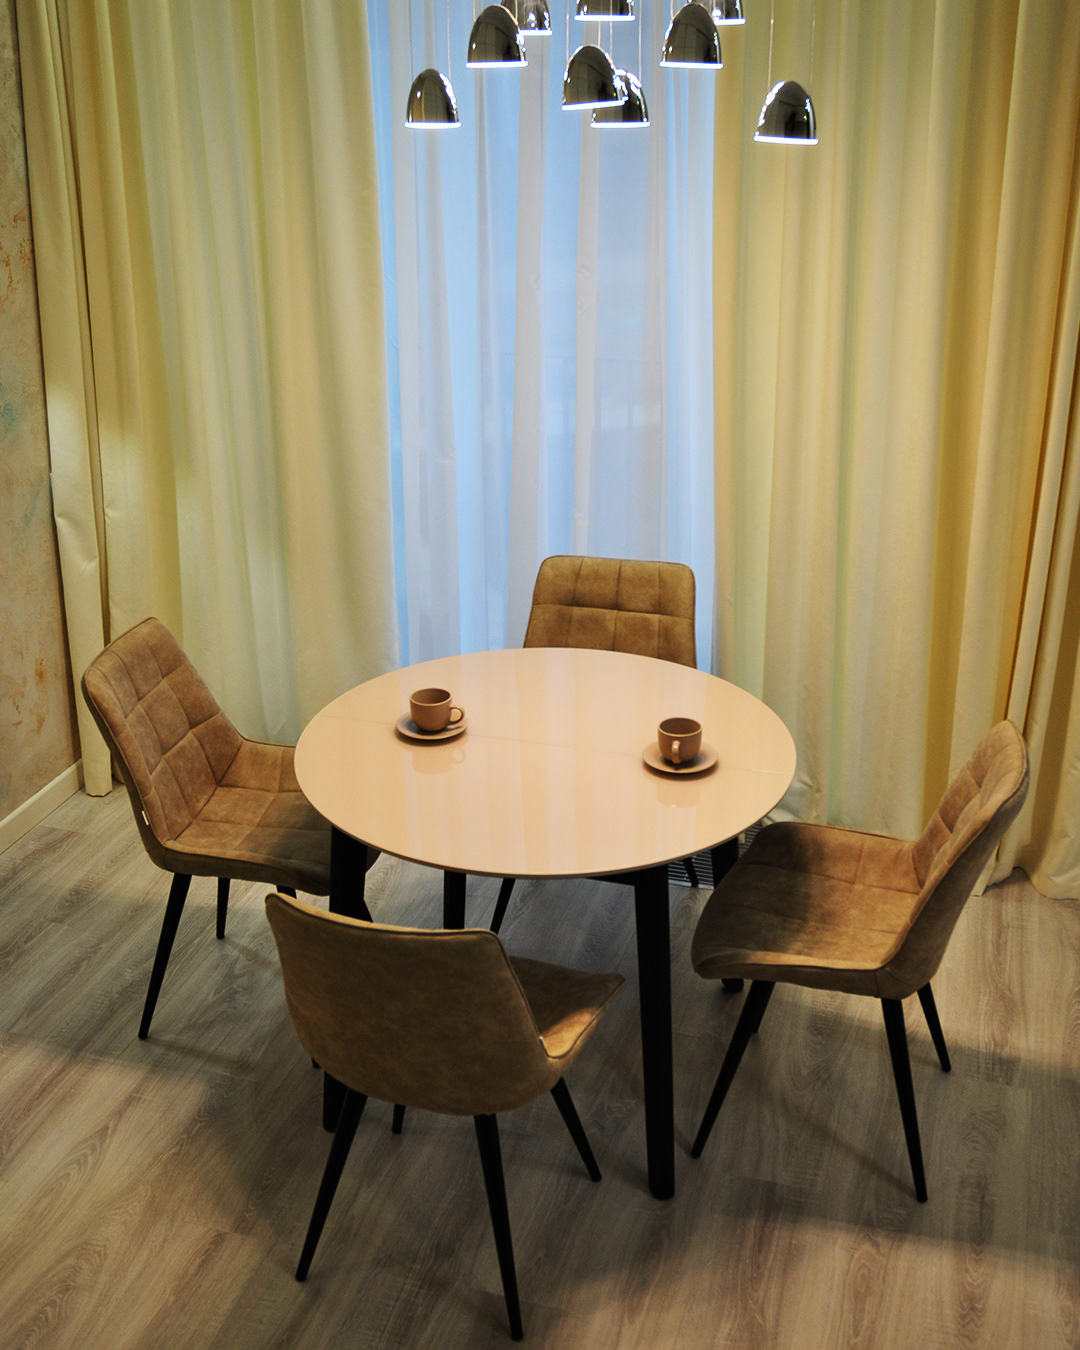 G.O.DESIGN.MOSCOW apartment atmosphere decor design G.O.DESIGN Interior interior design  Project Style